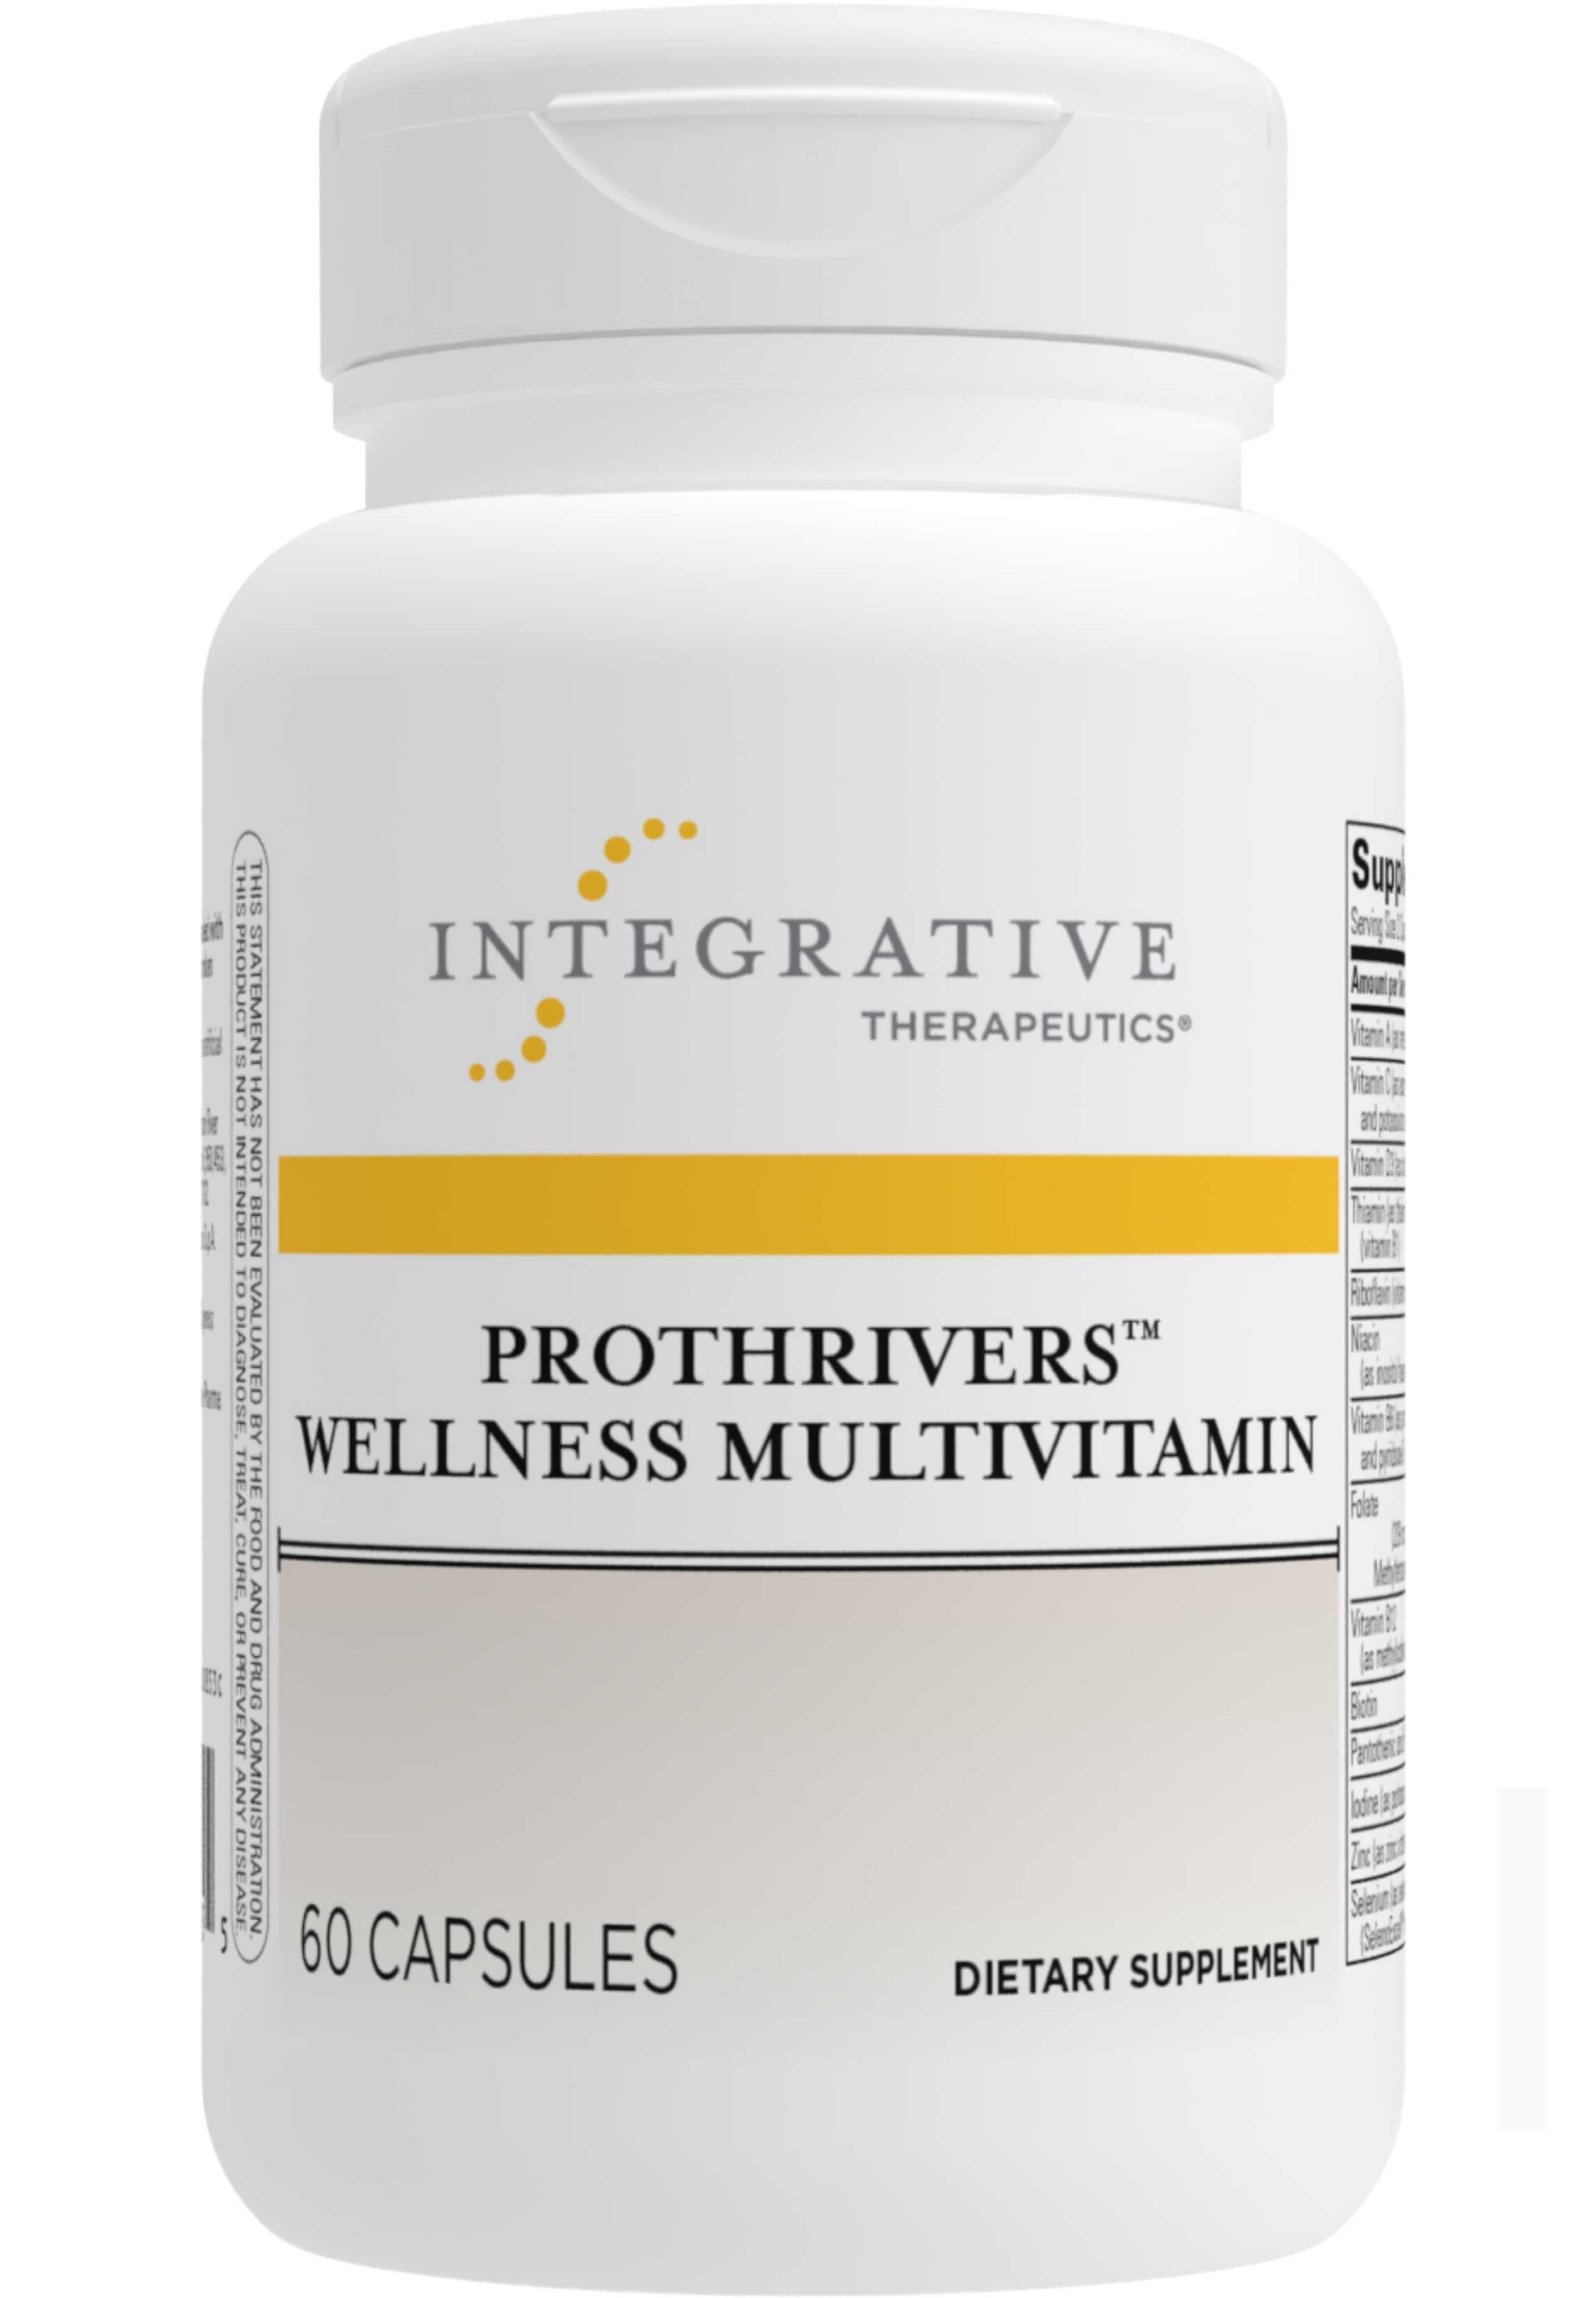 Integrative Therapeutics Prothrivers Wellness Multivitamin.